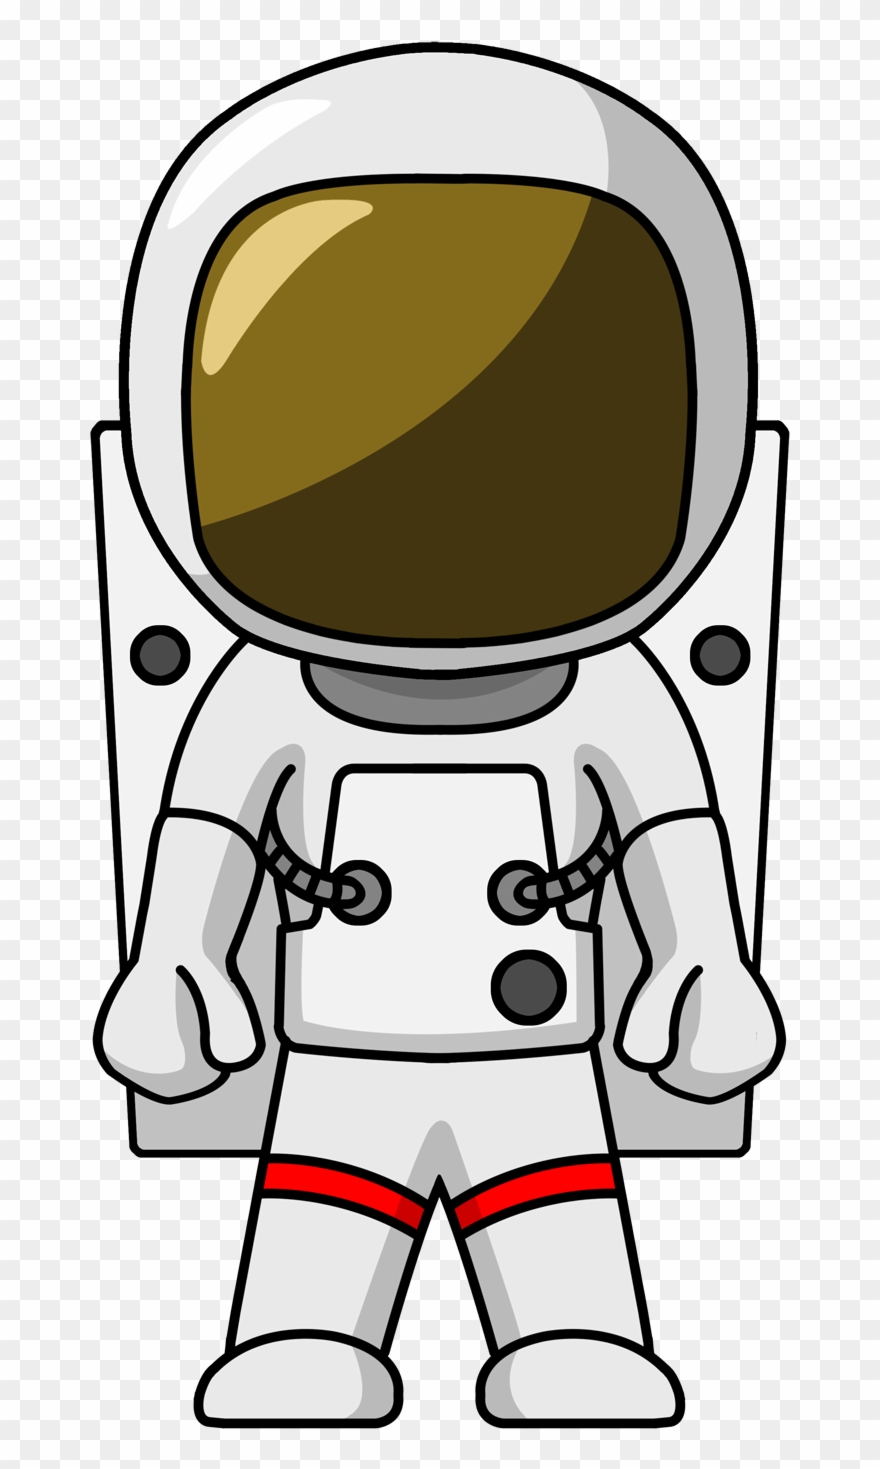 Free To Use Public Domain Astronaut Clip Art